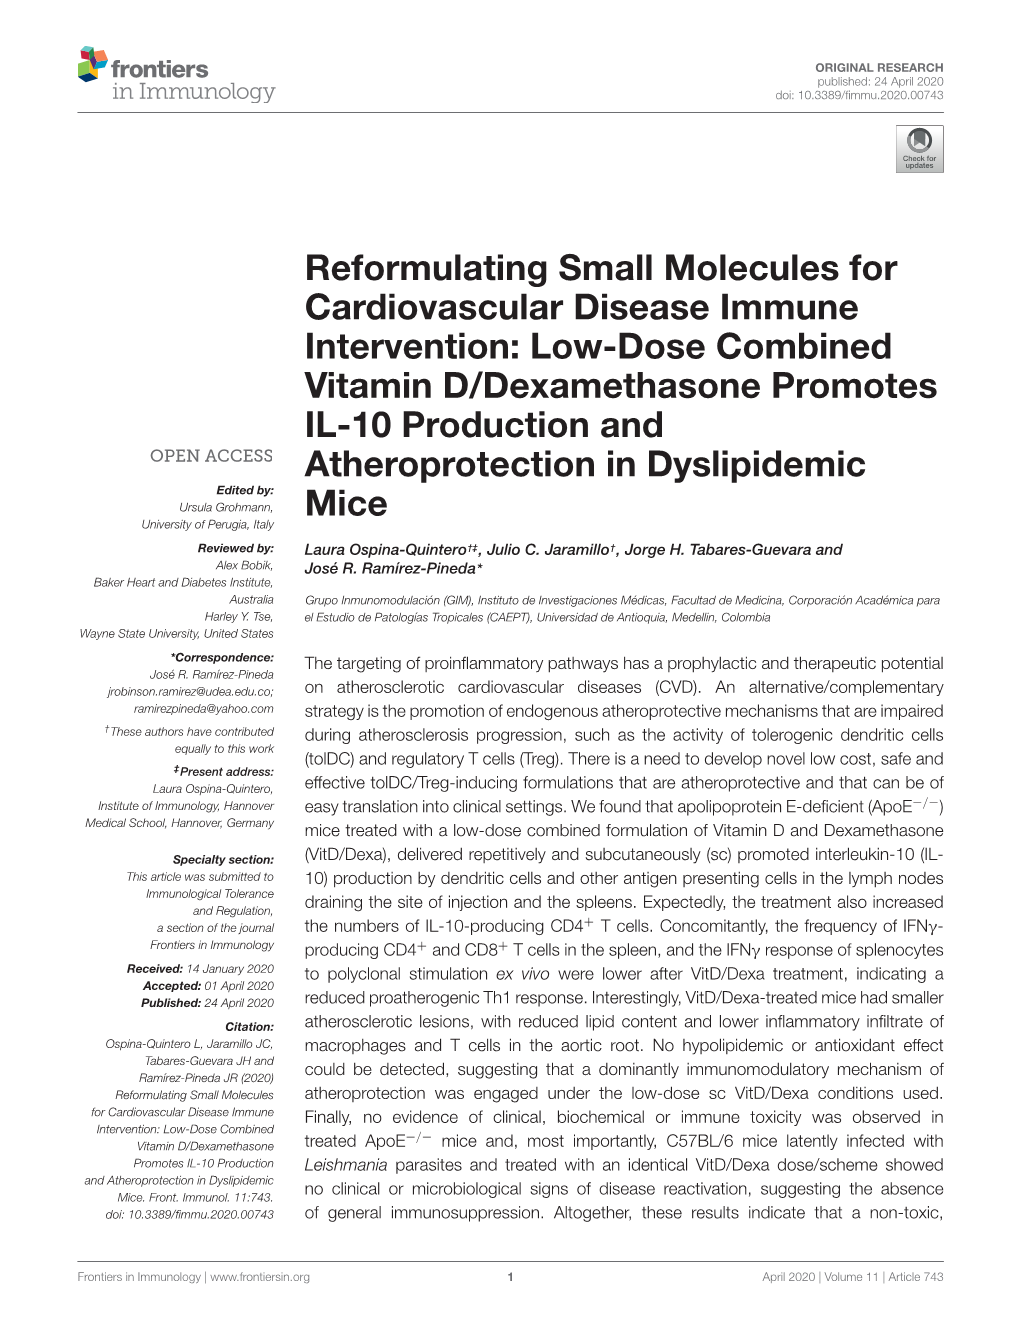 Low-Dose Combined Vitamin D/Dexamethasone Promotes